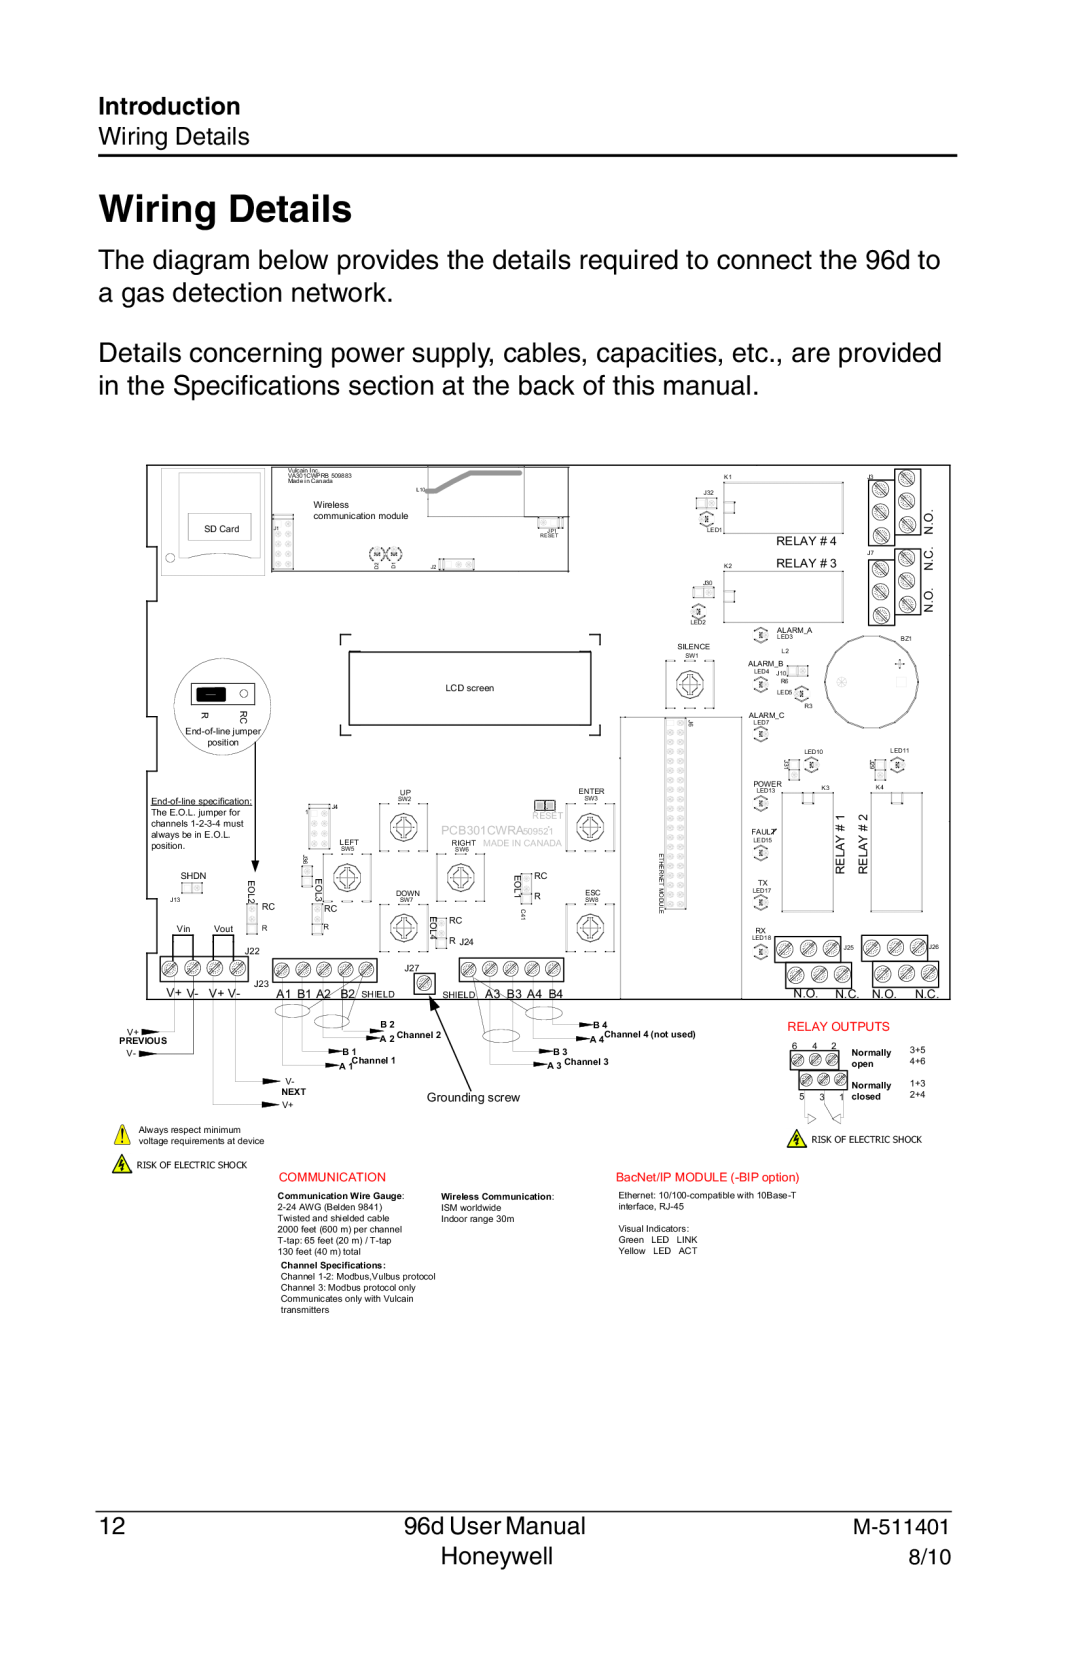 Honeywell 96D user manual Wiring Details, 5/$ 5/$, 9 9, 1& 